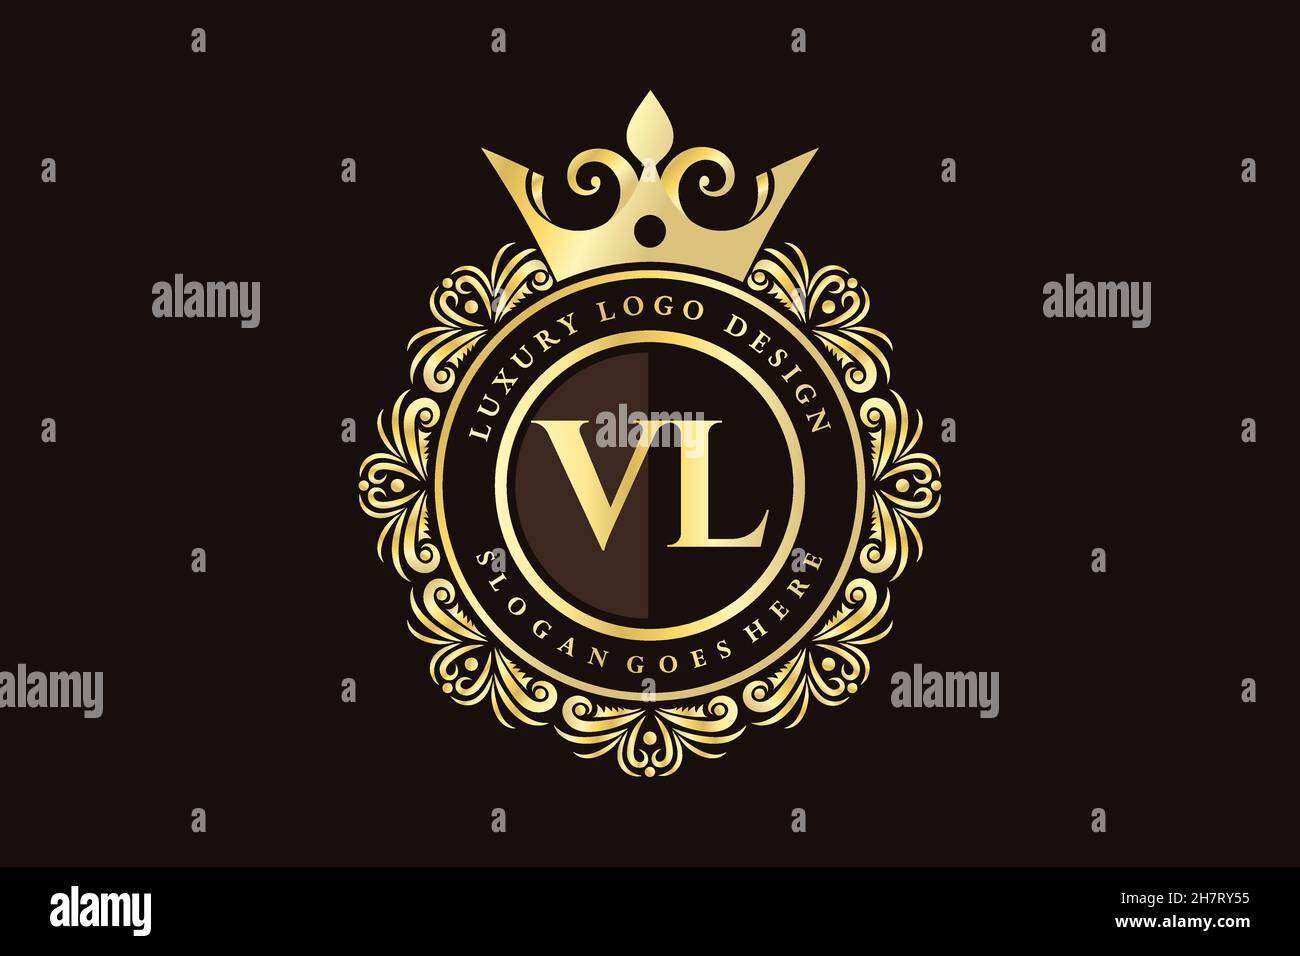 gold vl logo